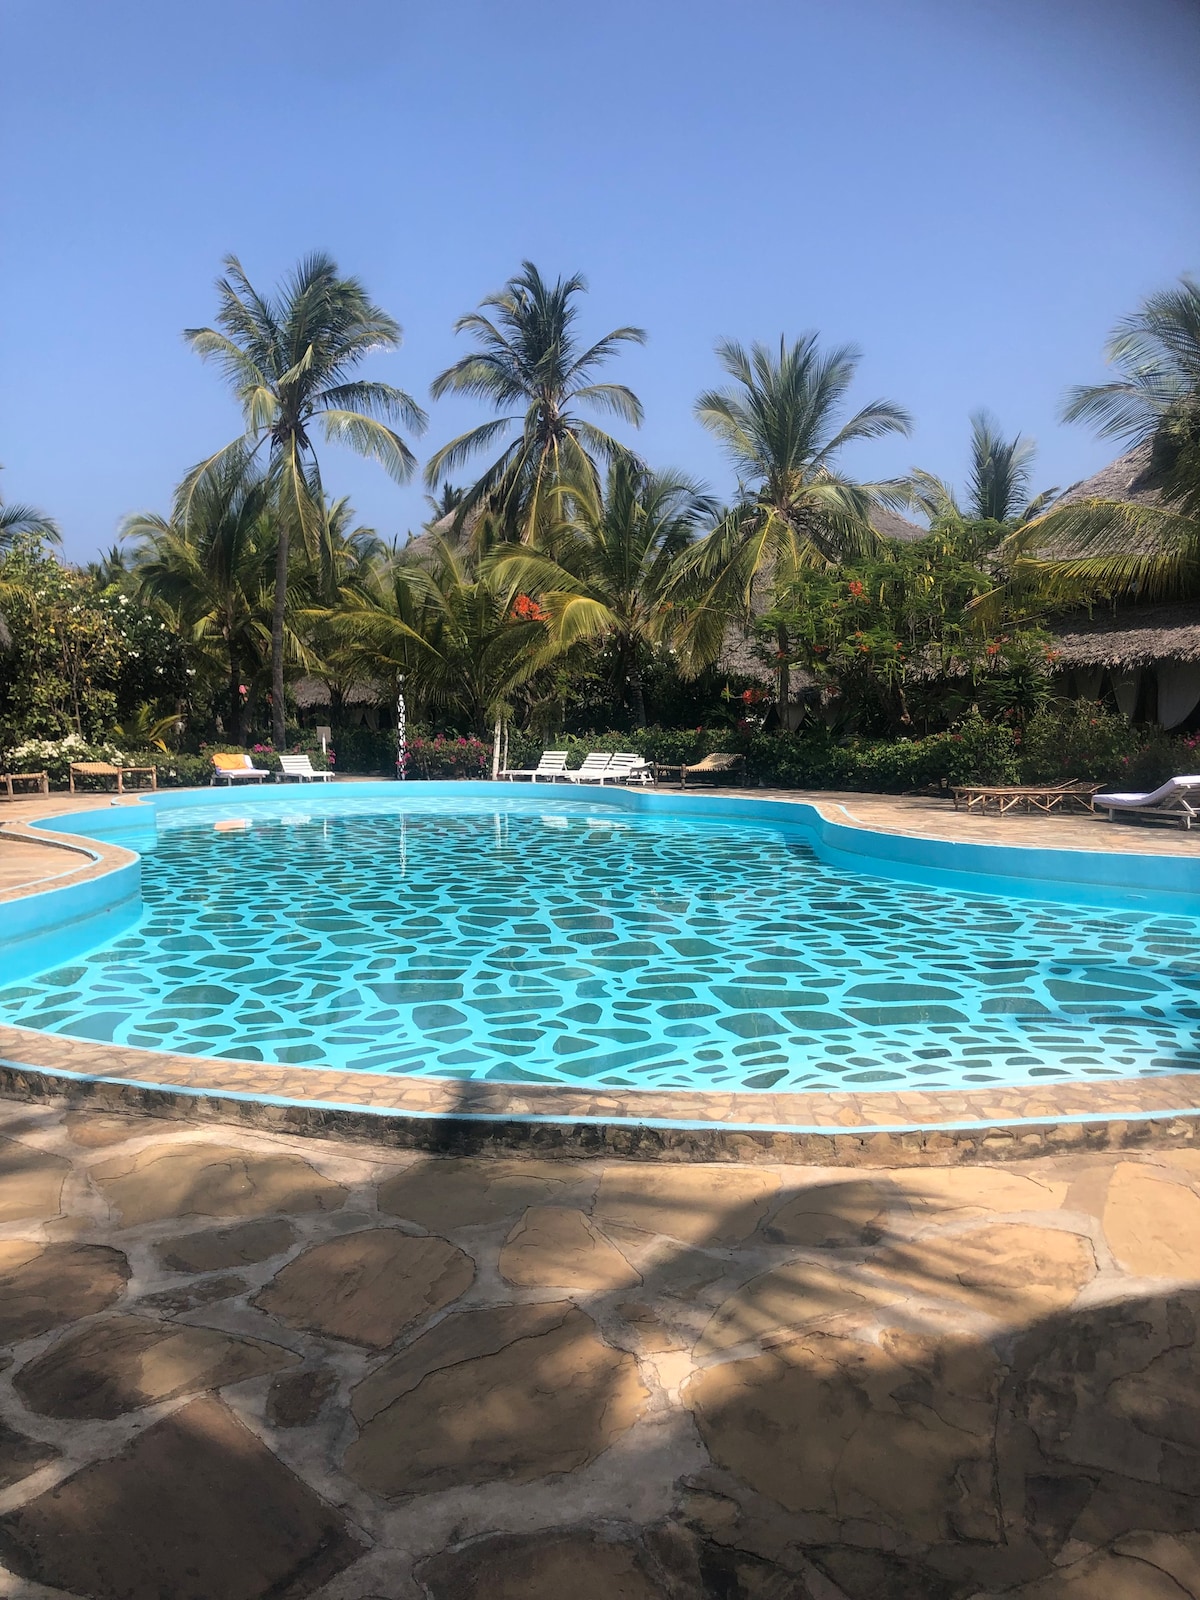 VillaKarembo sul mare:2 piscine-governante-Wi-Fi-